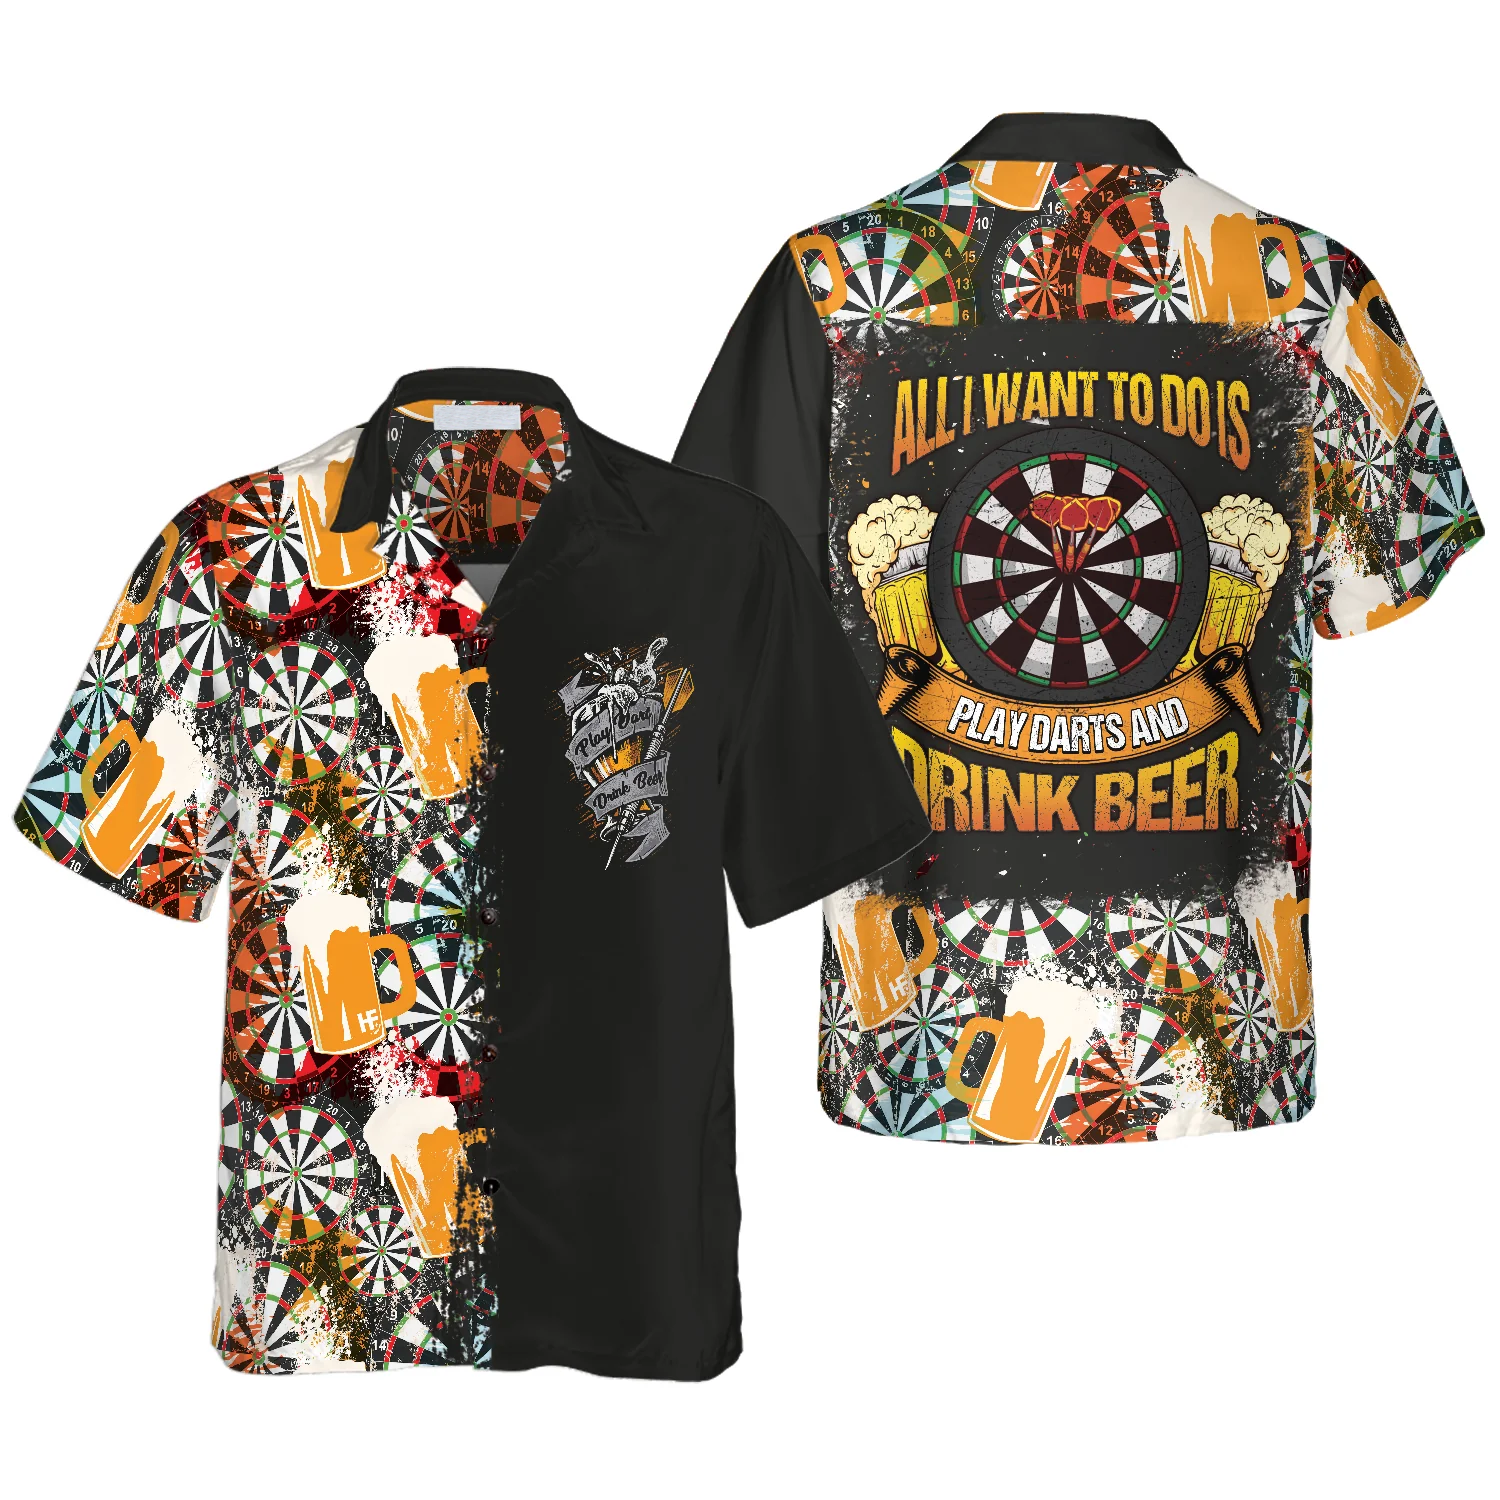 Play Darts And Drink Beer Aloha Hawaiian Shirt For Summer/ Colorful Hawaiian Shirt Outfit For Men Women/ Friend/ Team/ Darts Beer Lovers